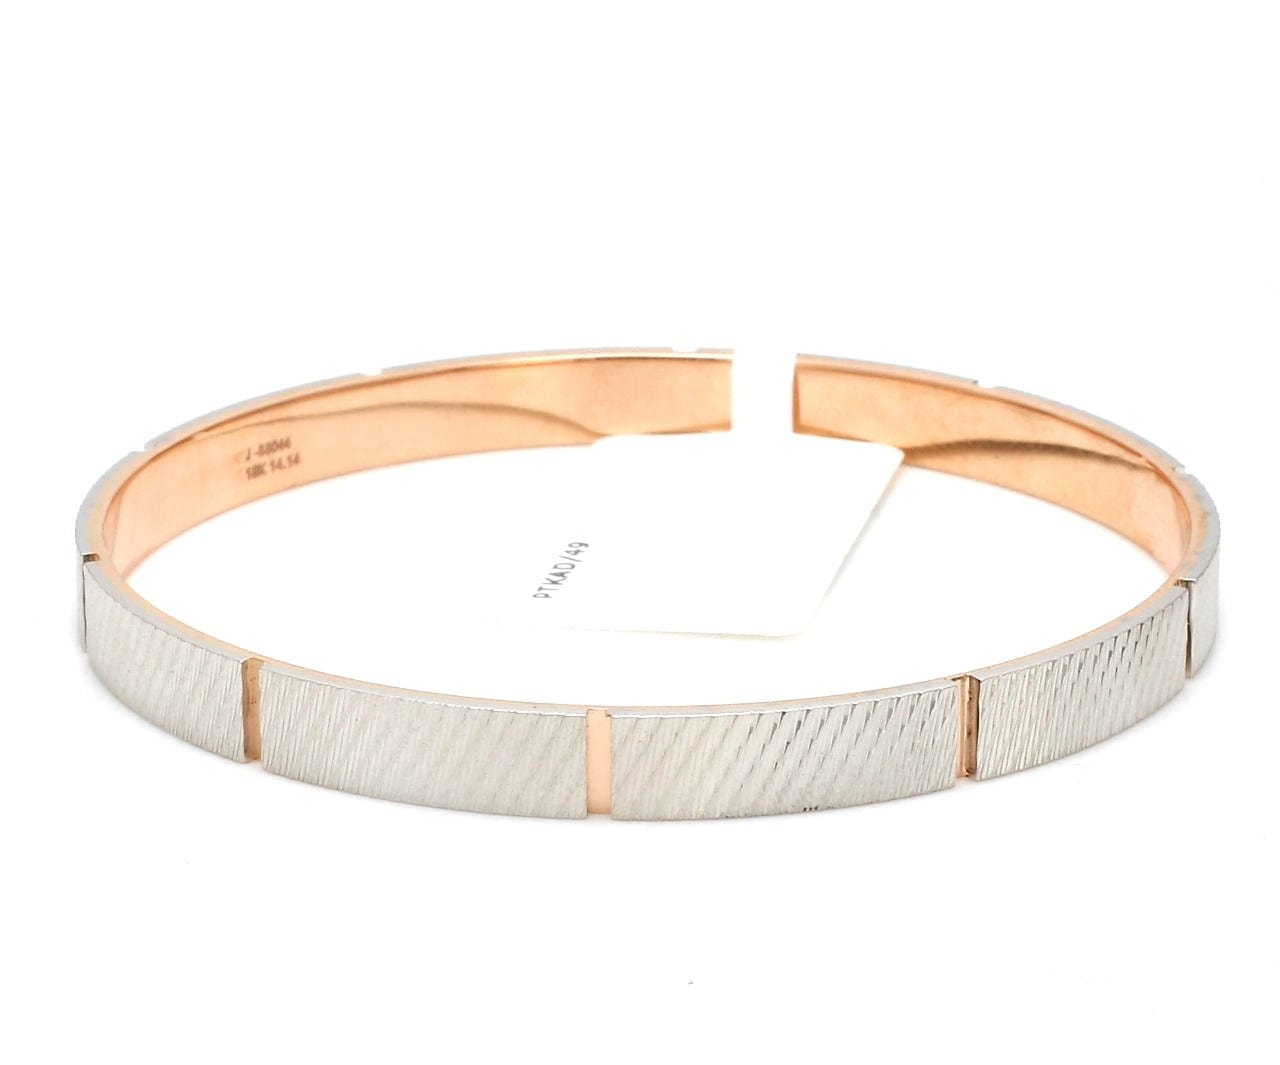 Showroom of Rosegold leather belt bracelet | Jewelxy - 171900